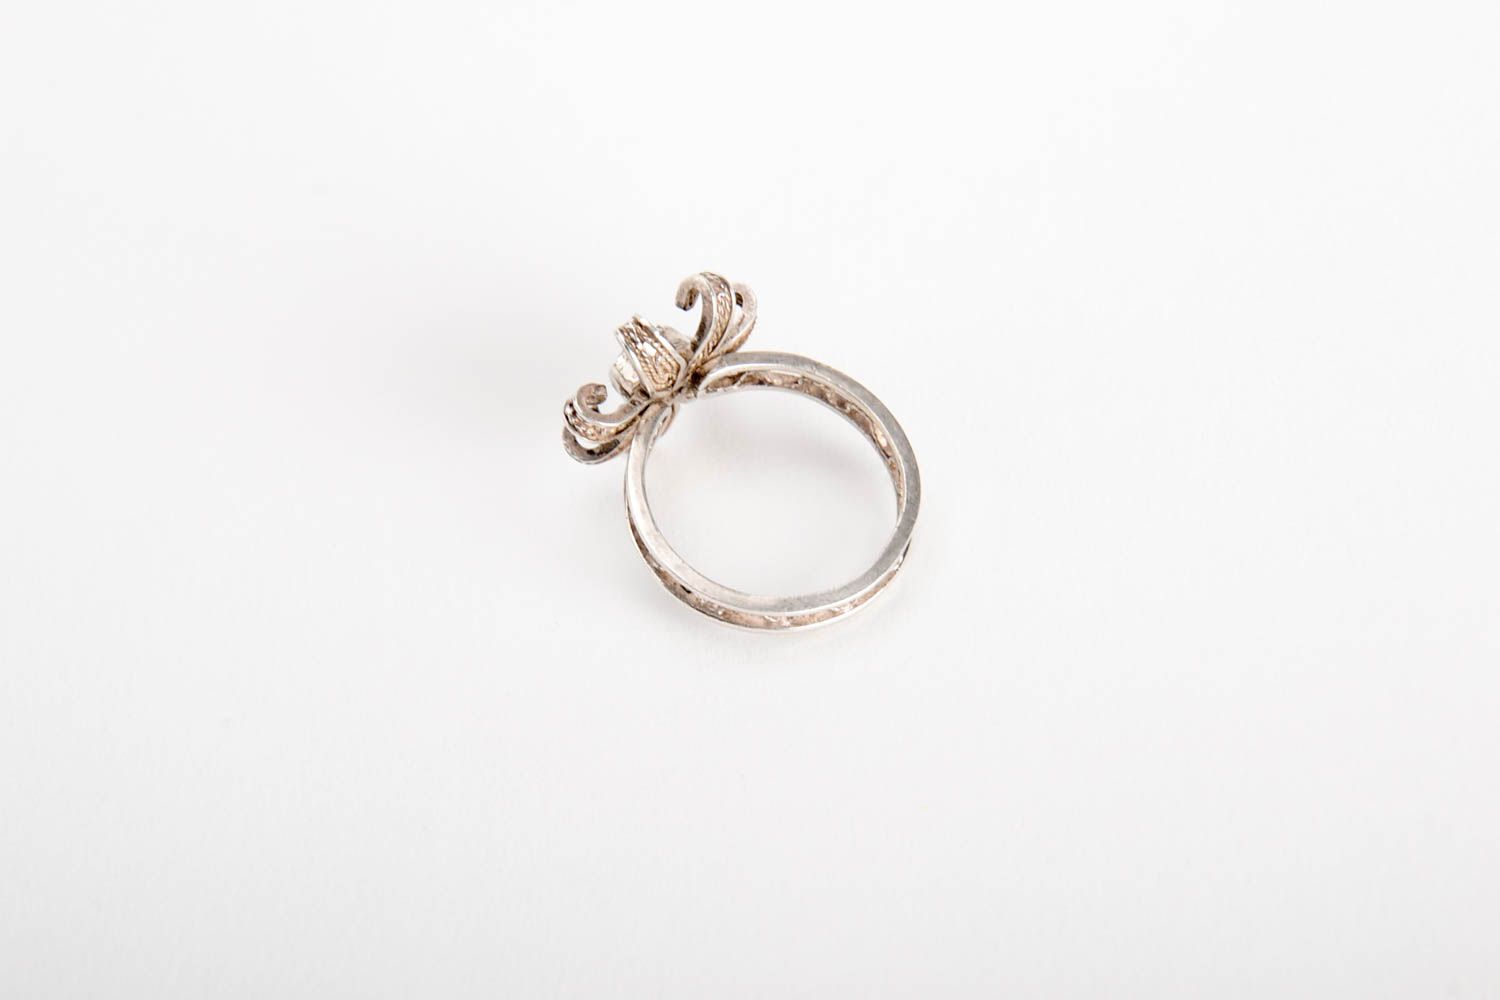 Handmade schöner Ring Damen Modeschmuck originell Geschenk Idee schön foto 3